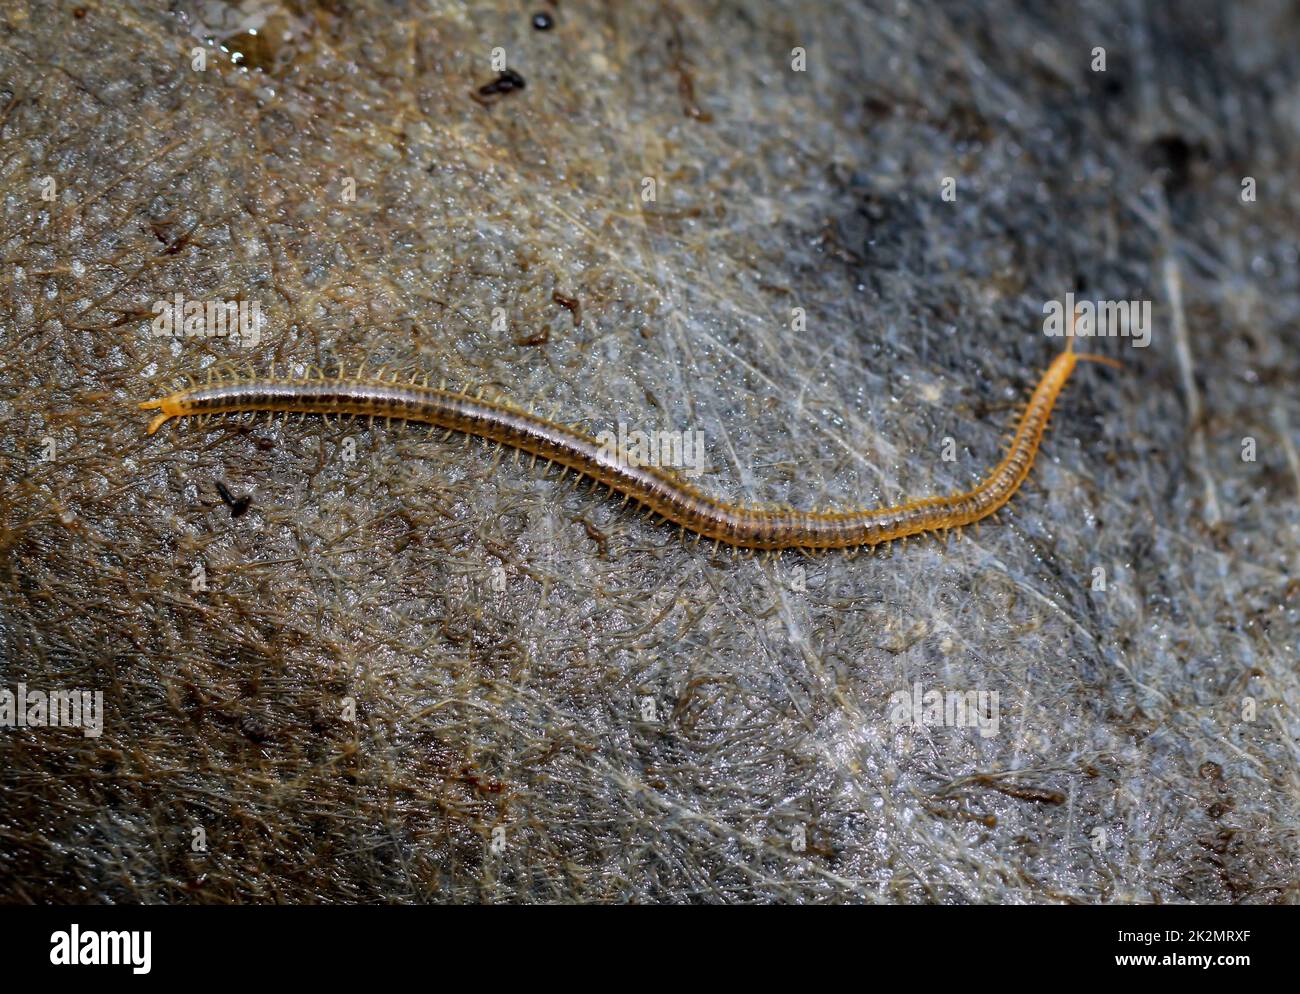 A close-up of a ground centipede, Geophilus carpophagus. Stock Photo